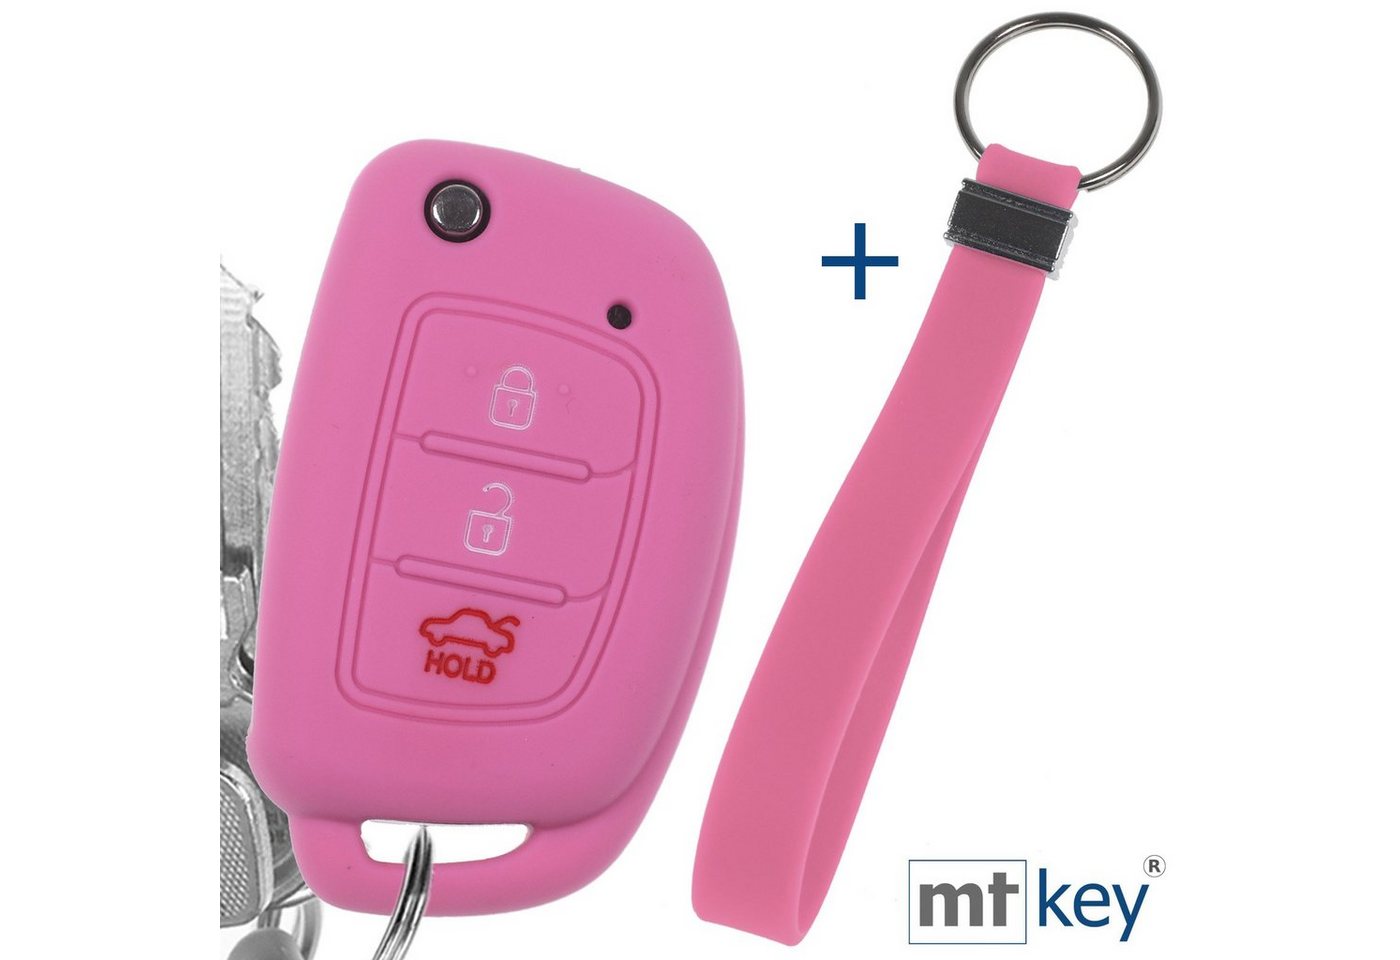 mt-key Schlüsseltasche Autoschlüssel Silikon Schutzhülle im Wabe Design Rosa + Schlüsselband, für Hyundai i10 i20 ix25 ix35 i40 Accent Tucson 3 Knopf Klappschlüssel von mt-key